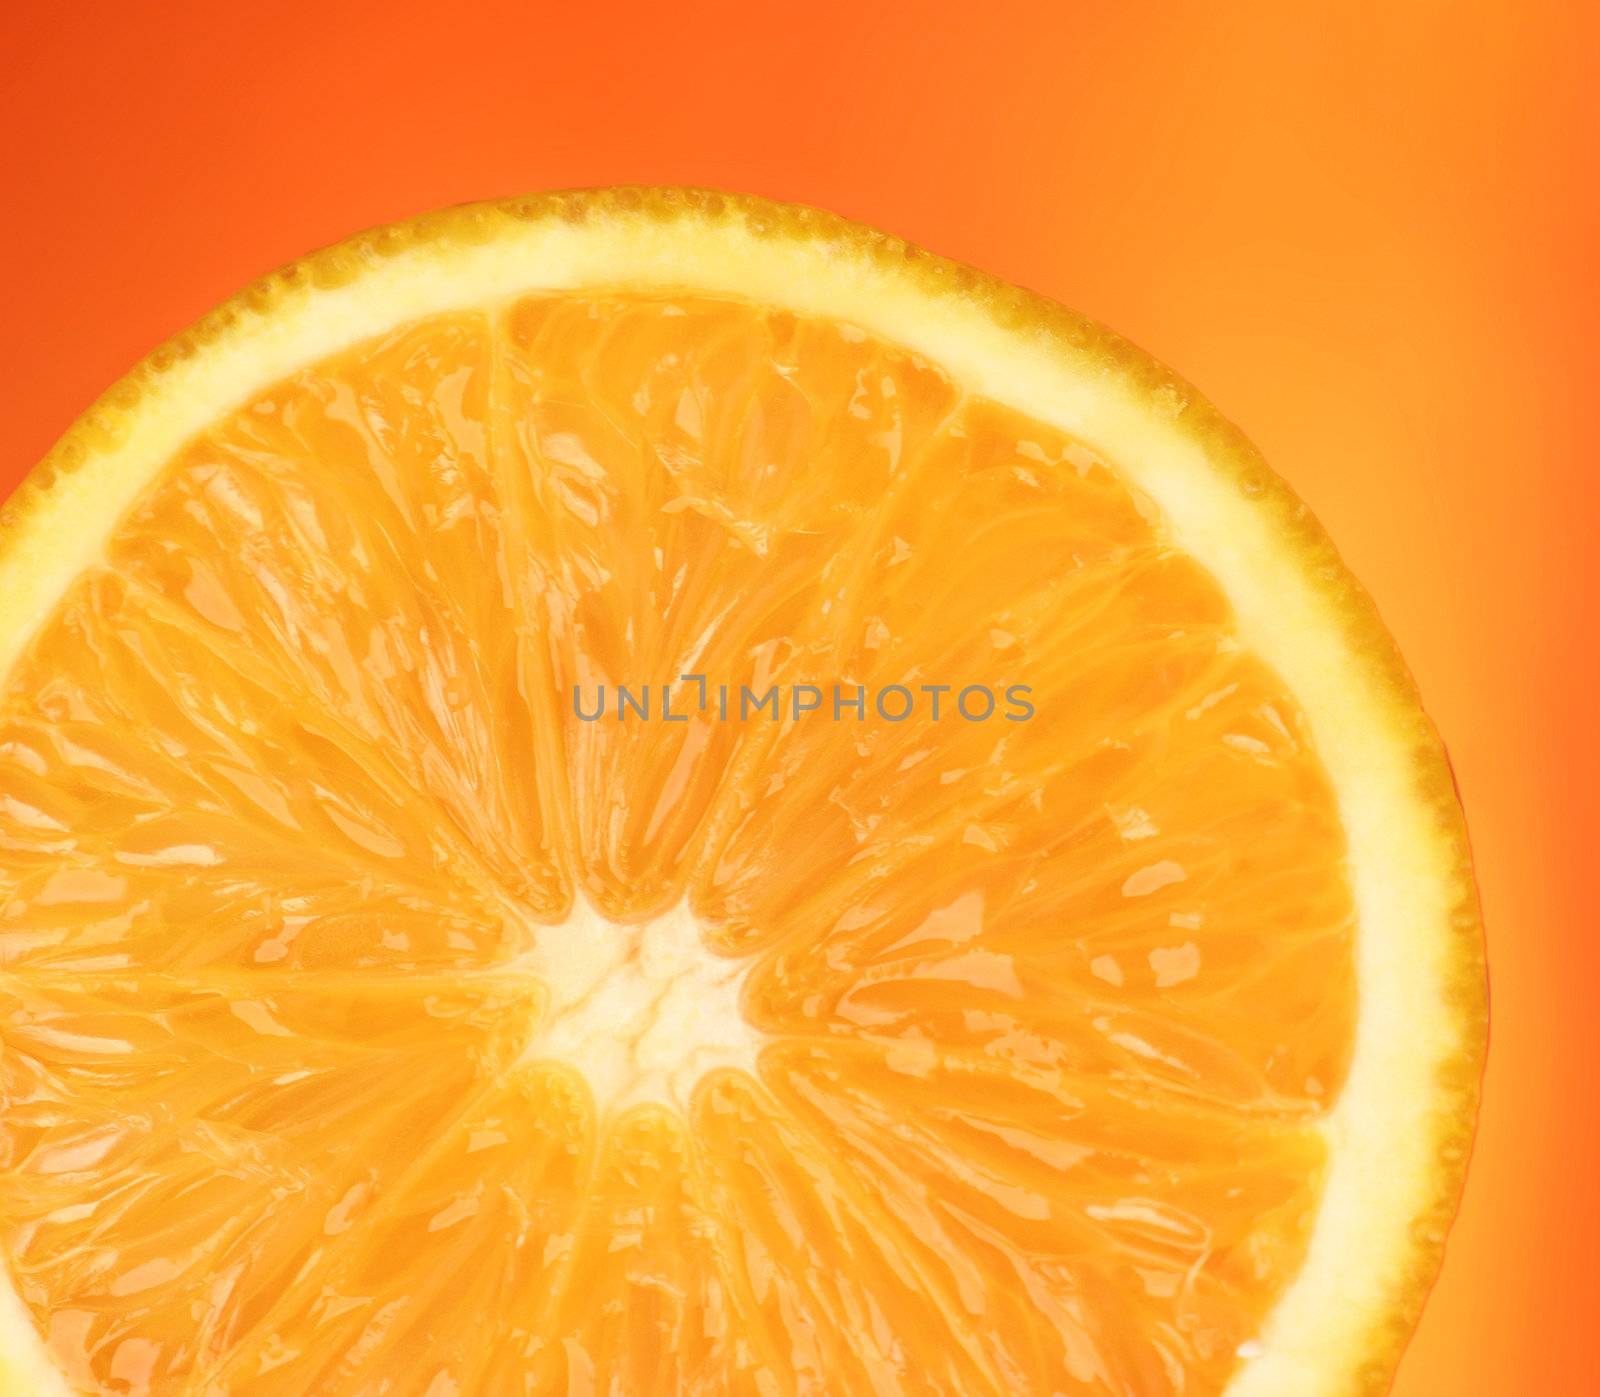 Sliced fresh orange with juice